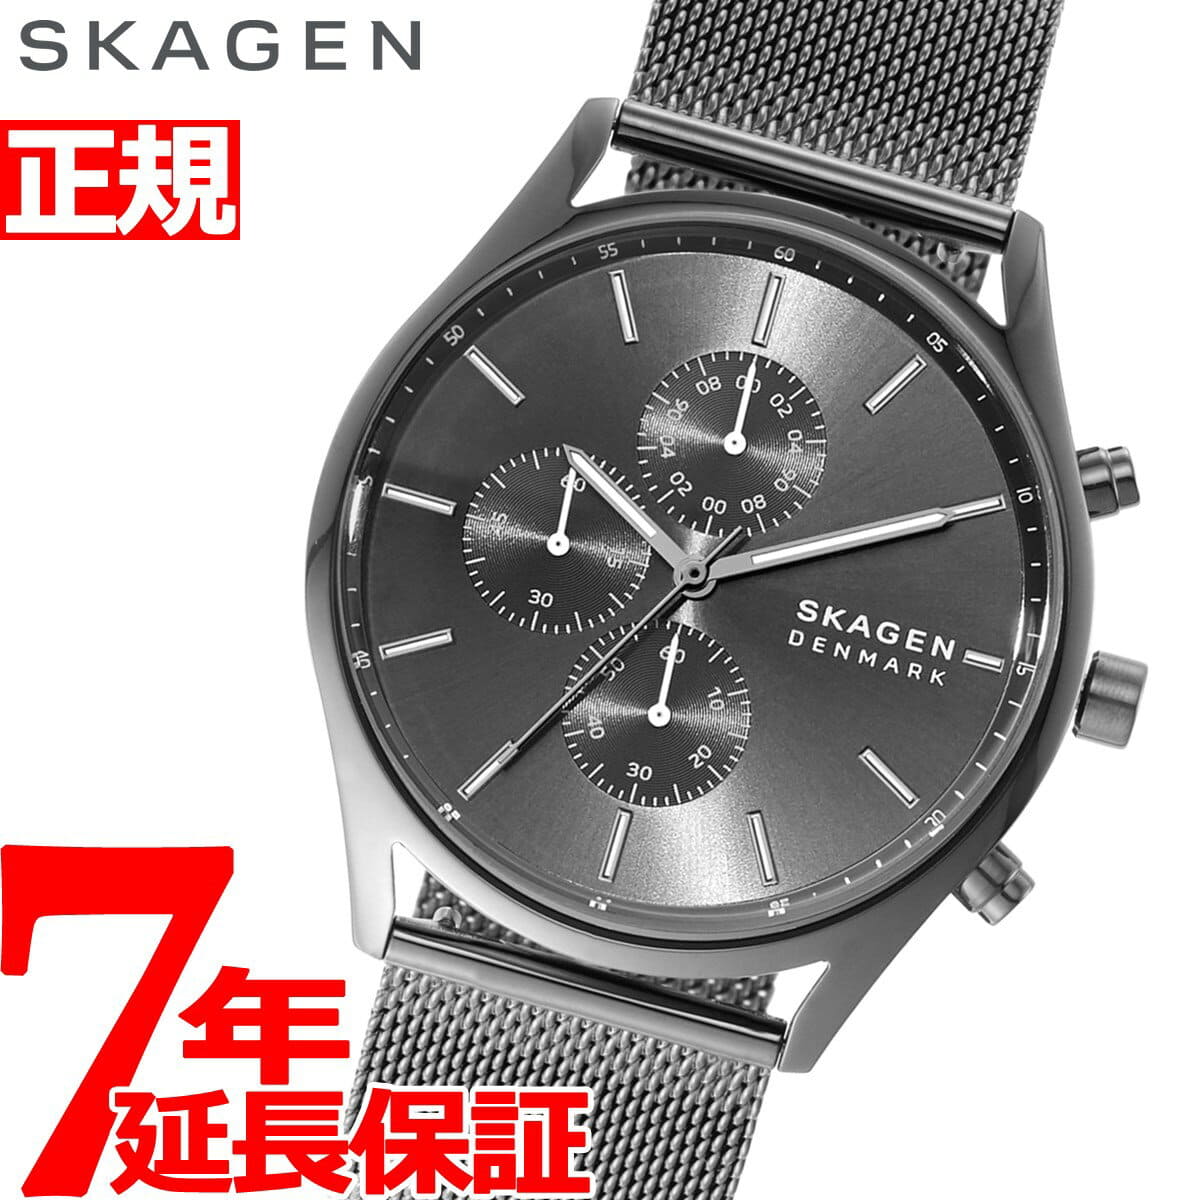 New]SKAGEN HOLST Men\'s Watch FORWARD - Chronograph SKW6608 BE Store